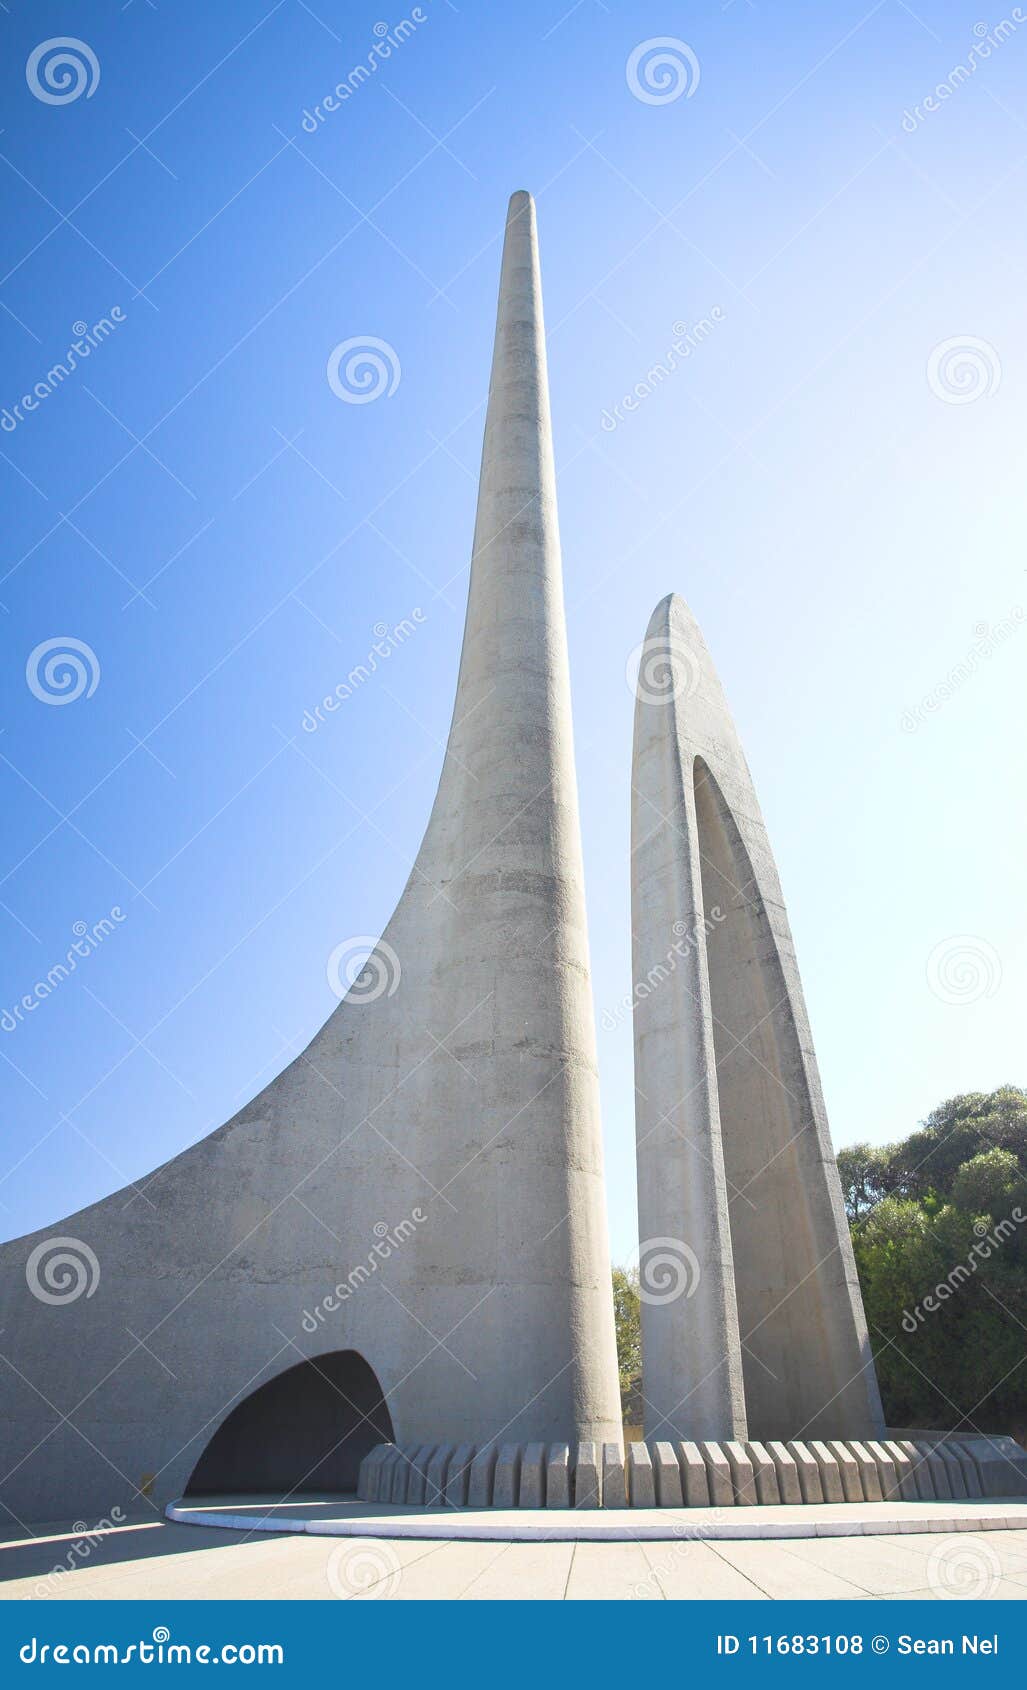 landmark of the afrikaans language monument